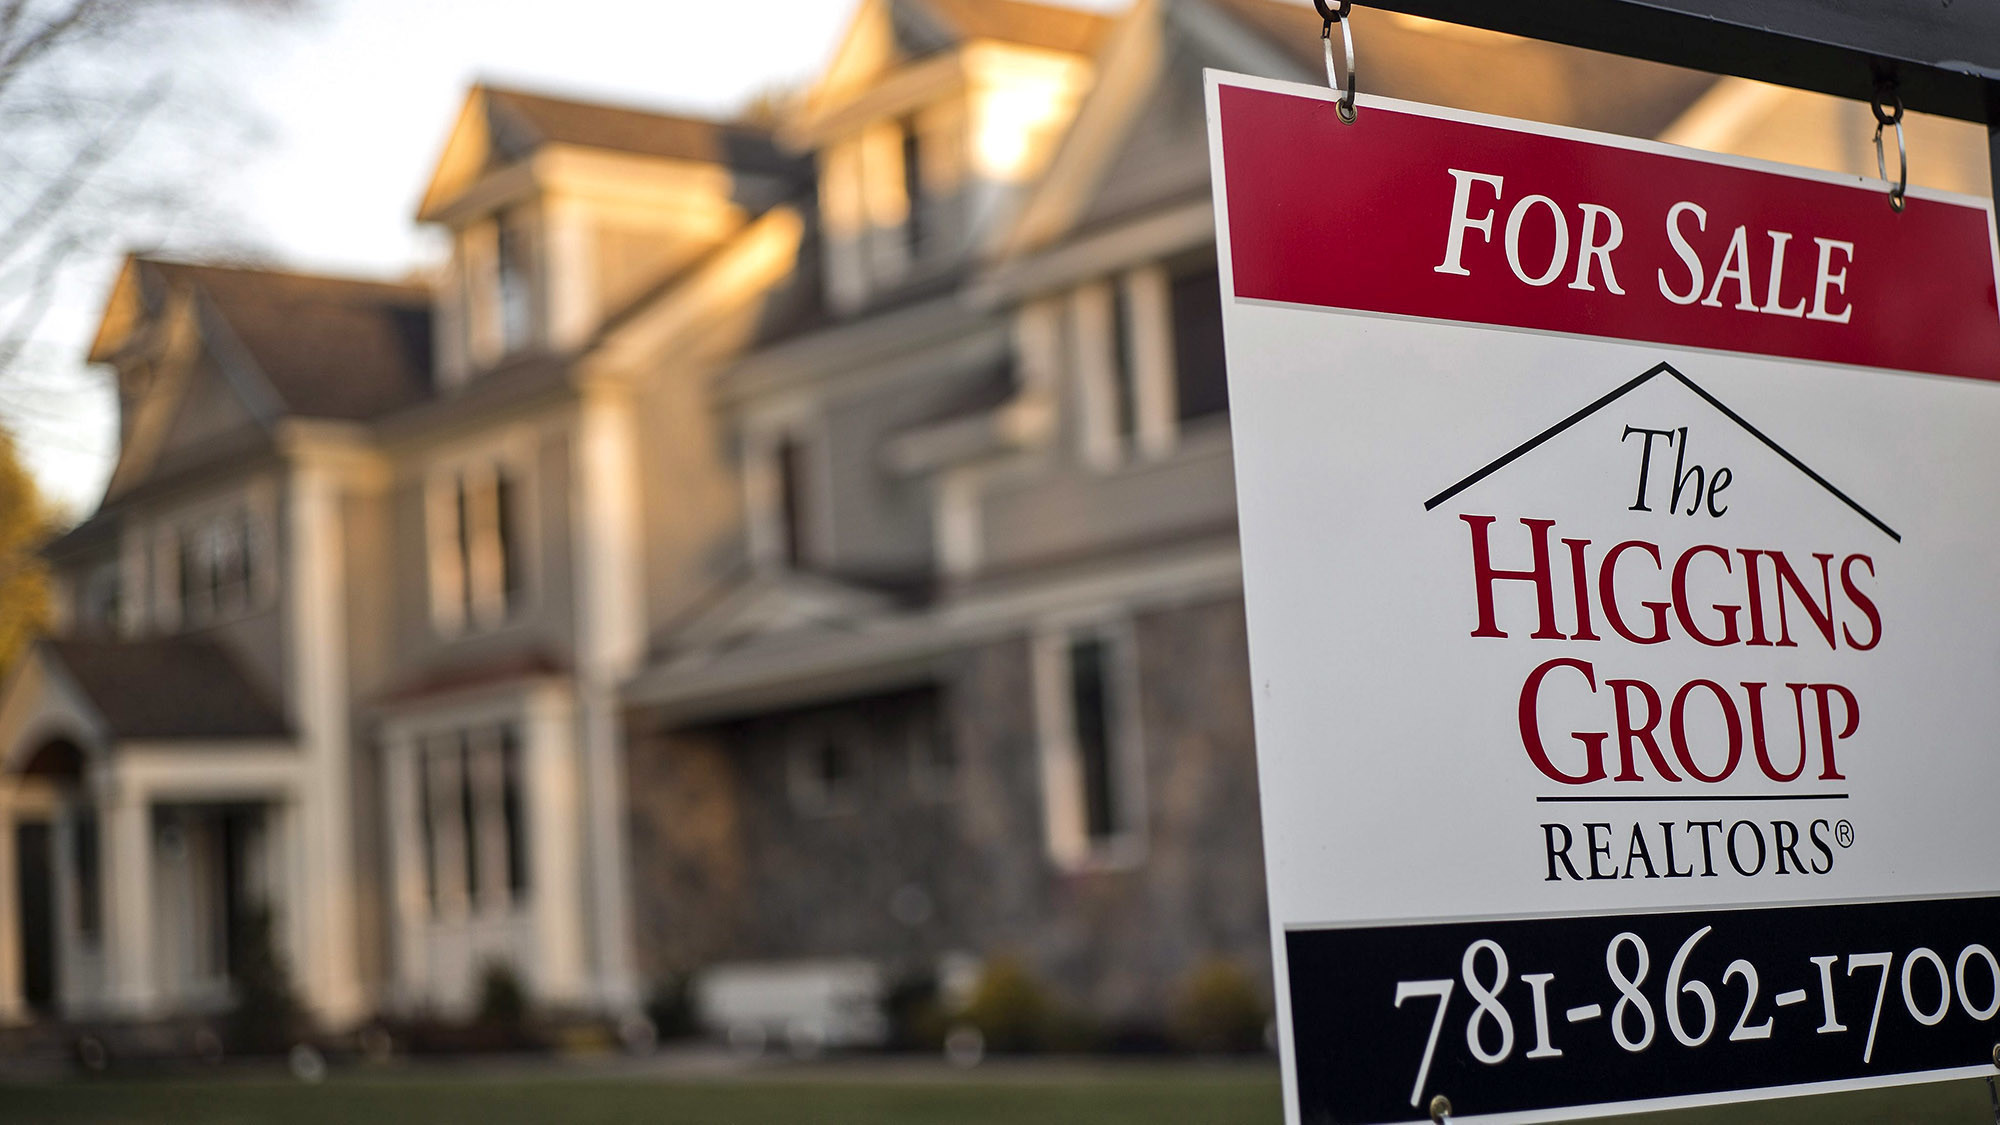 What is an FHA home loan?